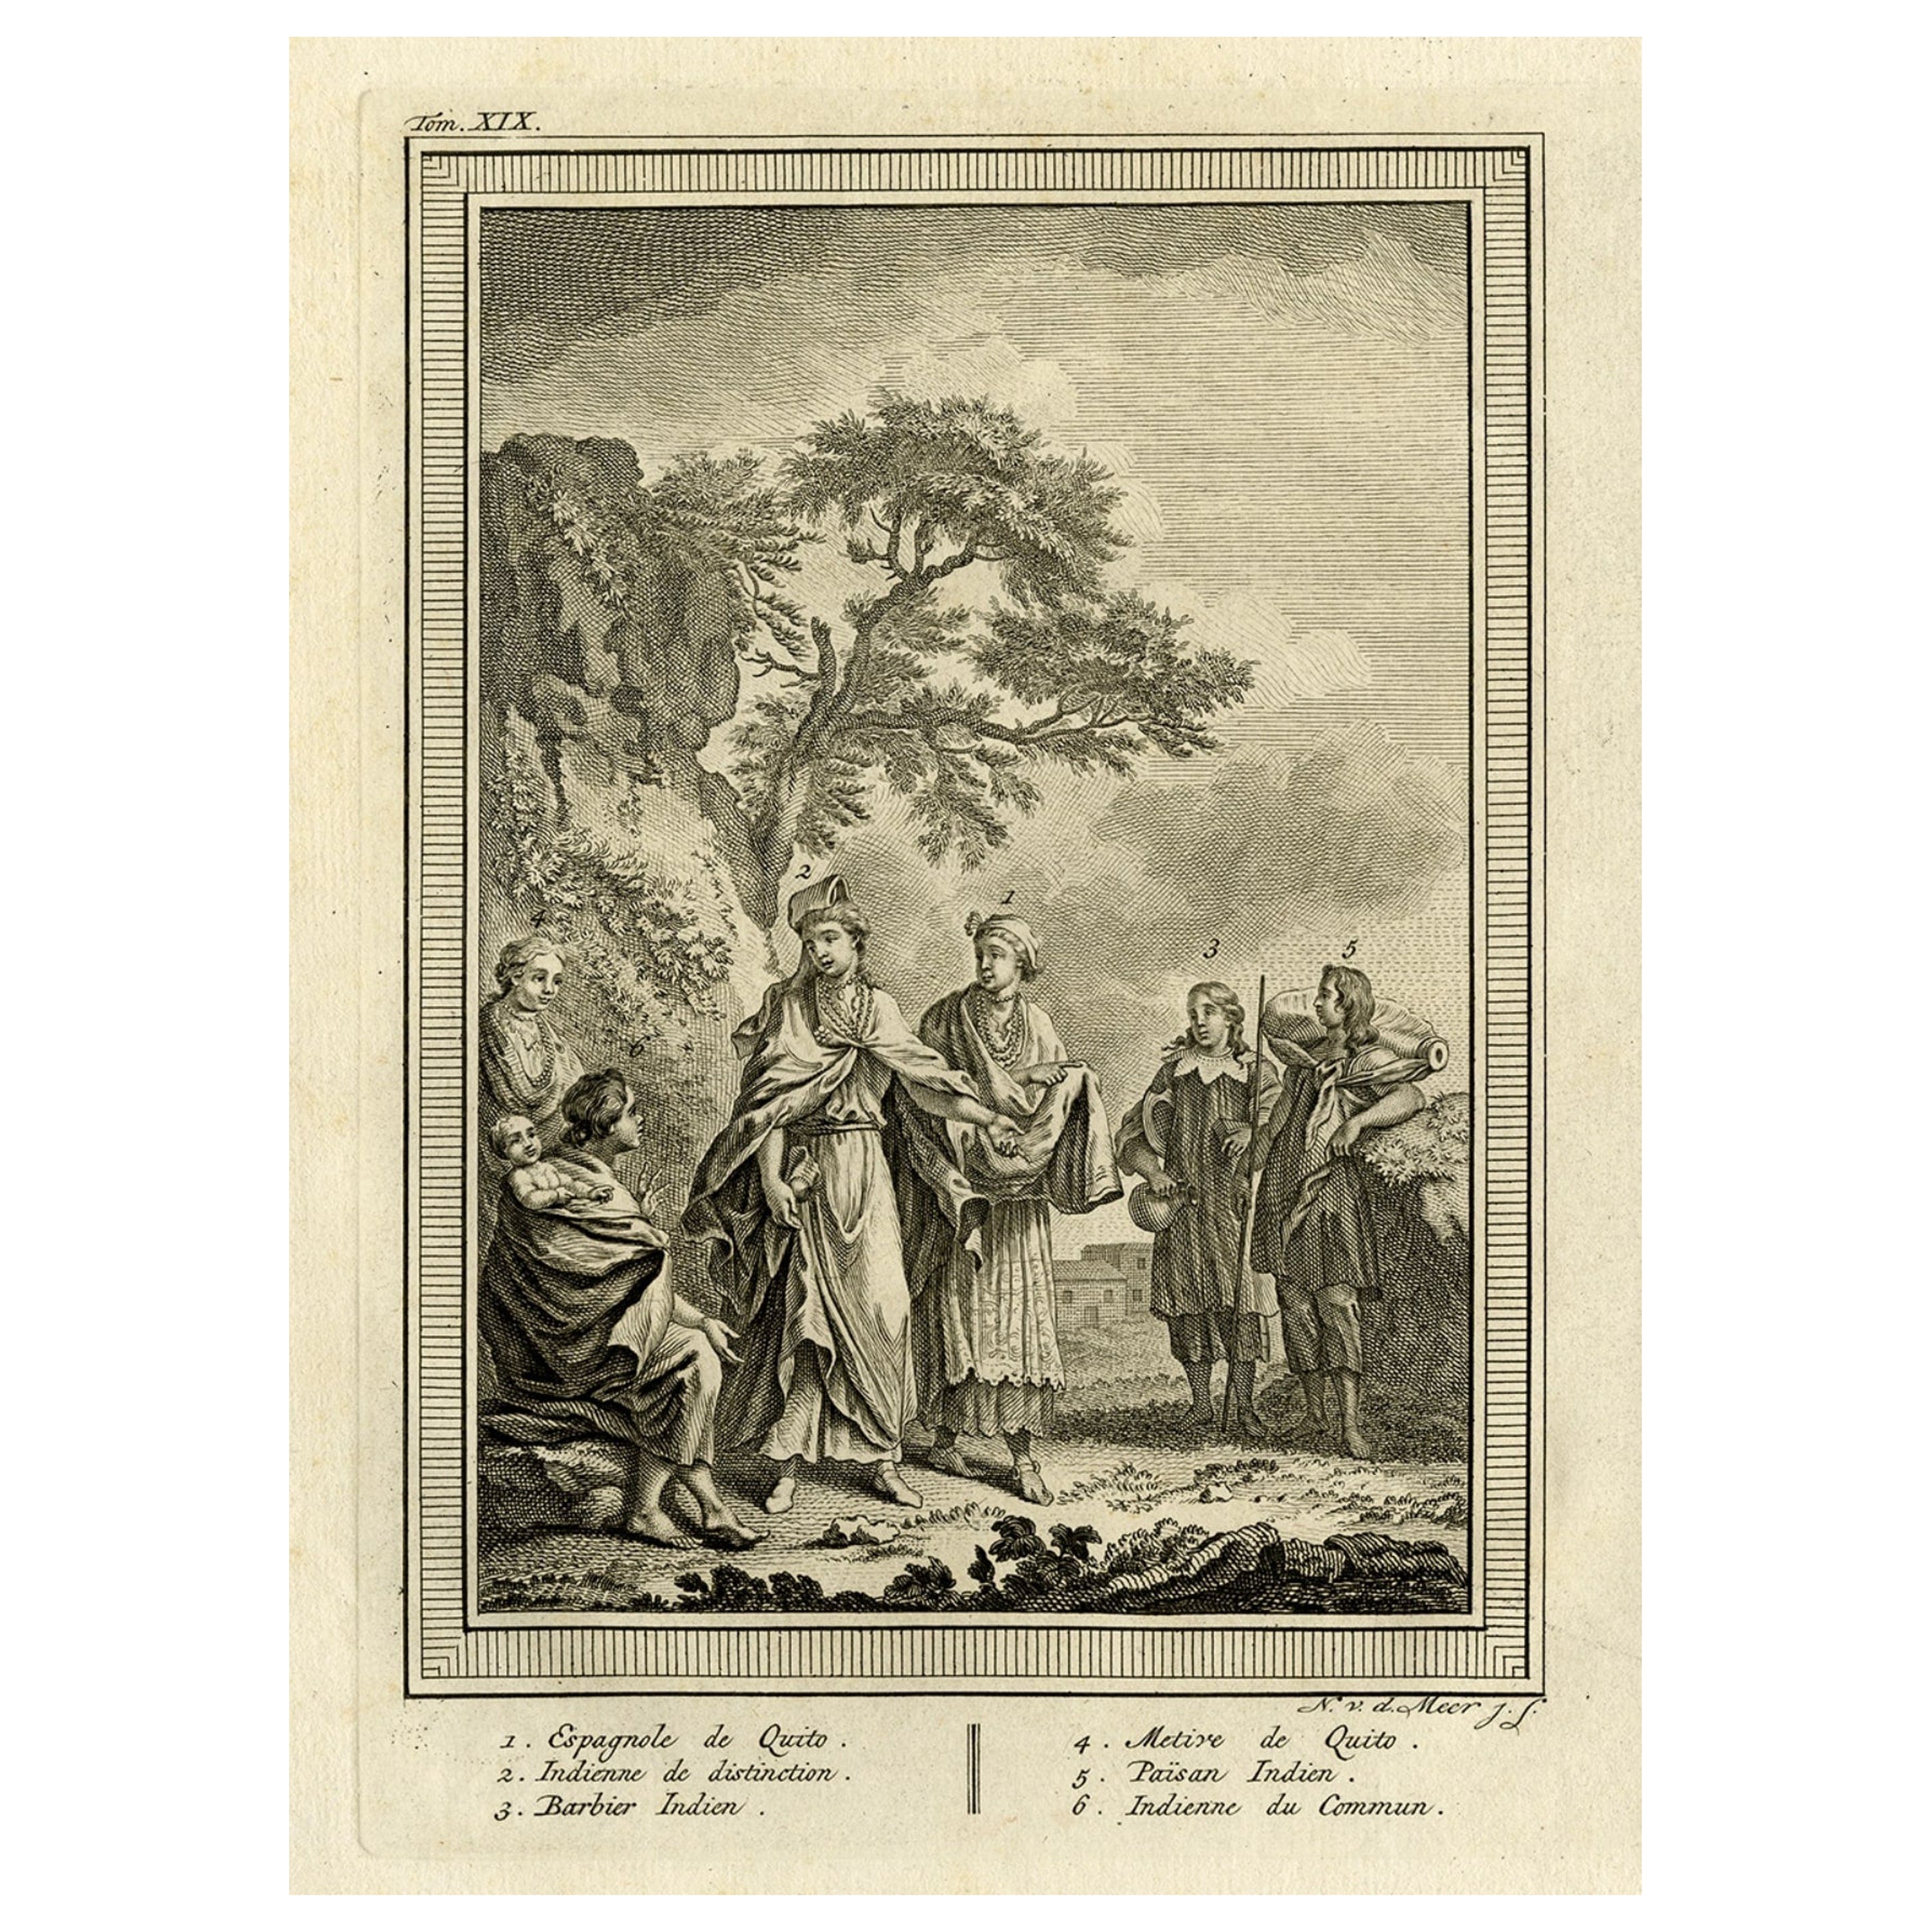 Antique Print of Six South American Figures, Incl a Barber, Farmer, Etc. c.1770